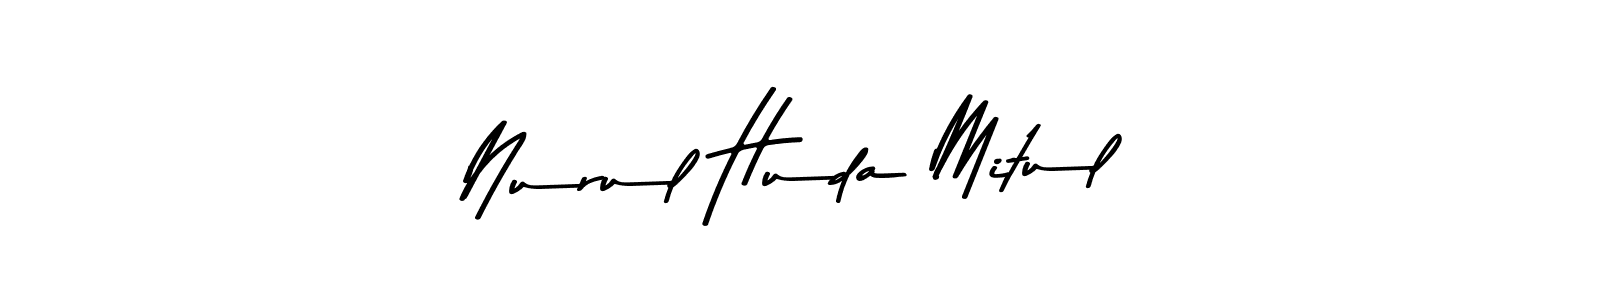 Make a beautiful signature design for name Nurul Huda Mitul. Use this online signature maker to create a handwritten signature for free. Nurul Huda Mitul signature style 9 images and pictures png